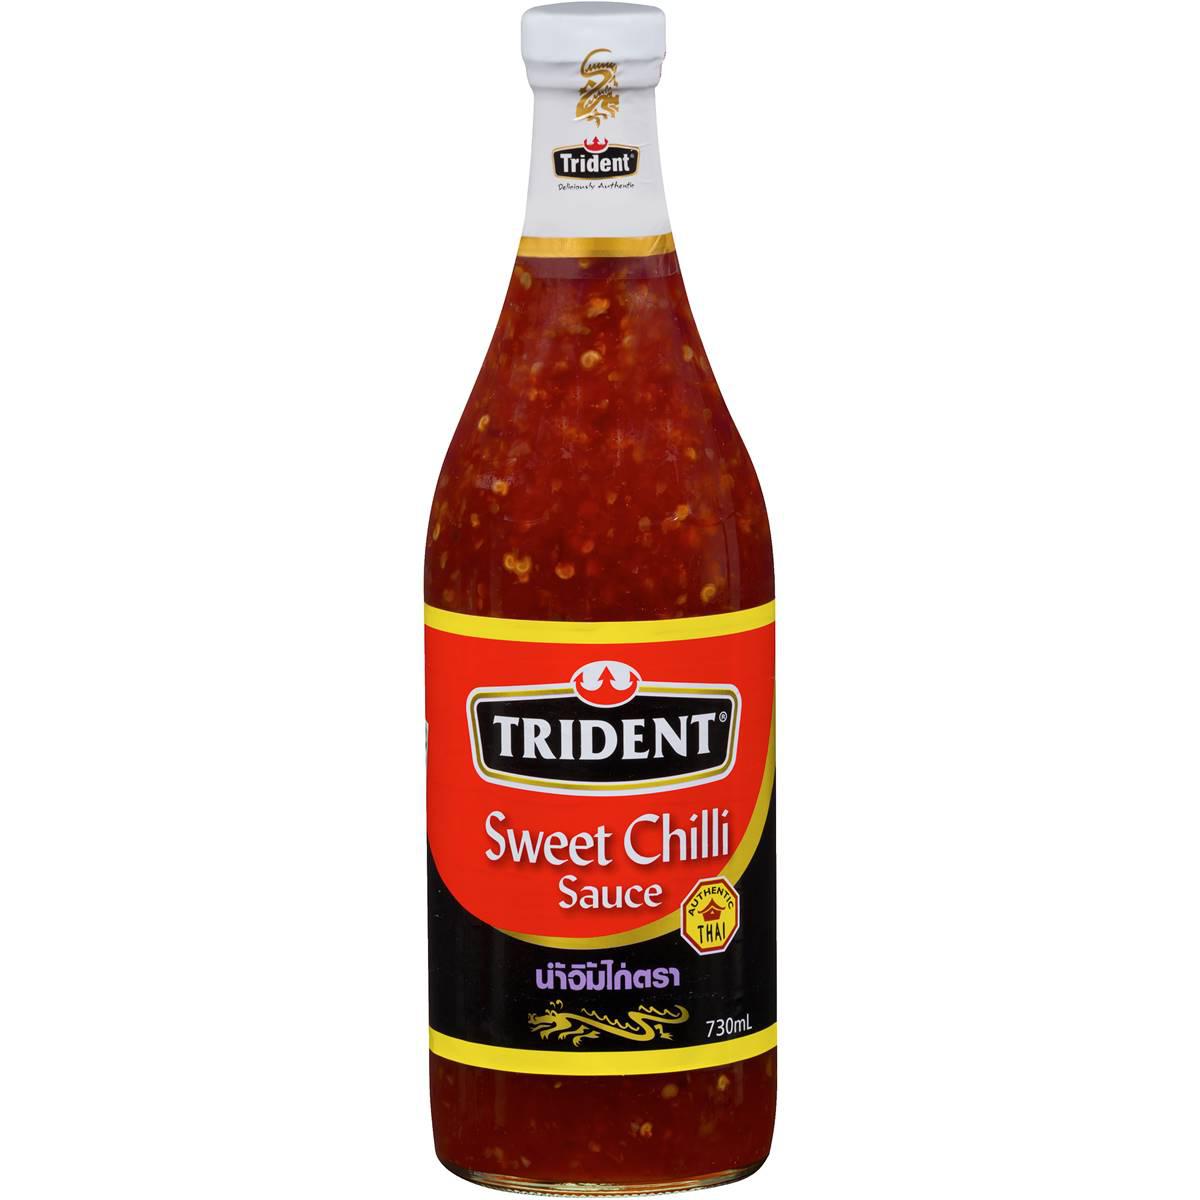 Trident Chilli Sauce Sweet Chilli 730ml